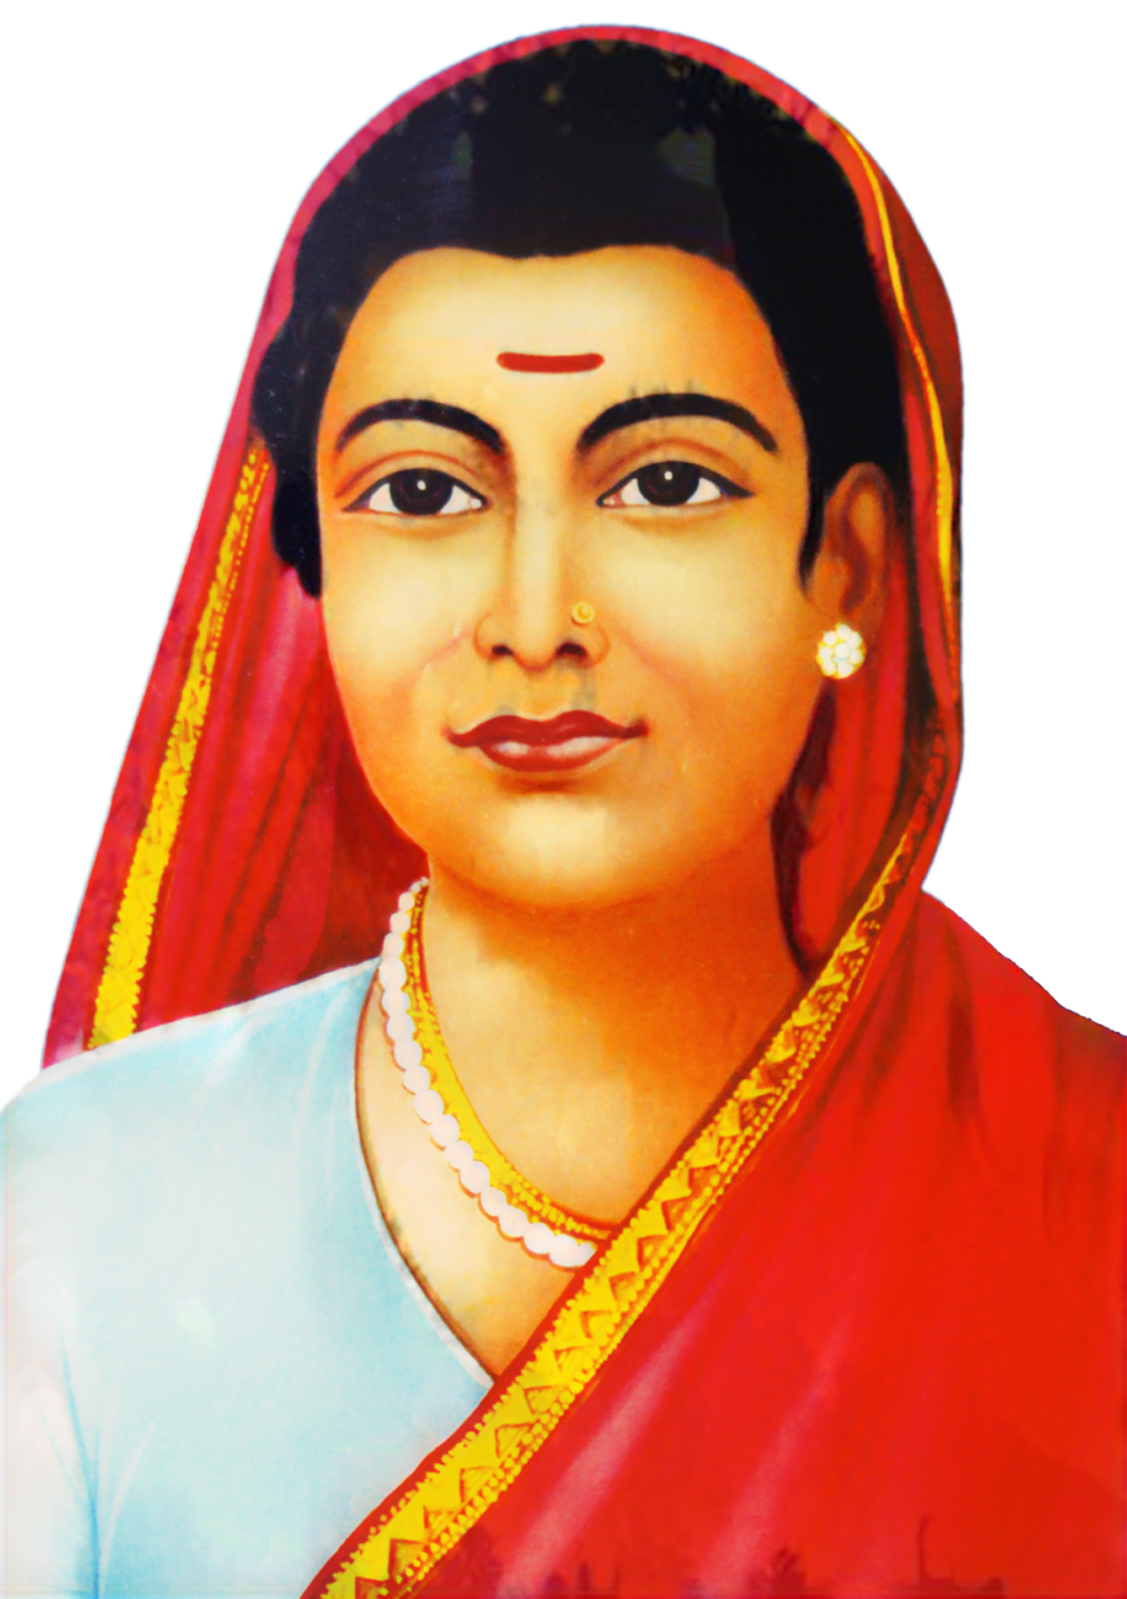 Savitribai Phule honoured as the mother of Indian Feminism by PM Modi